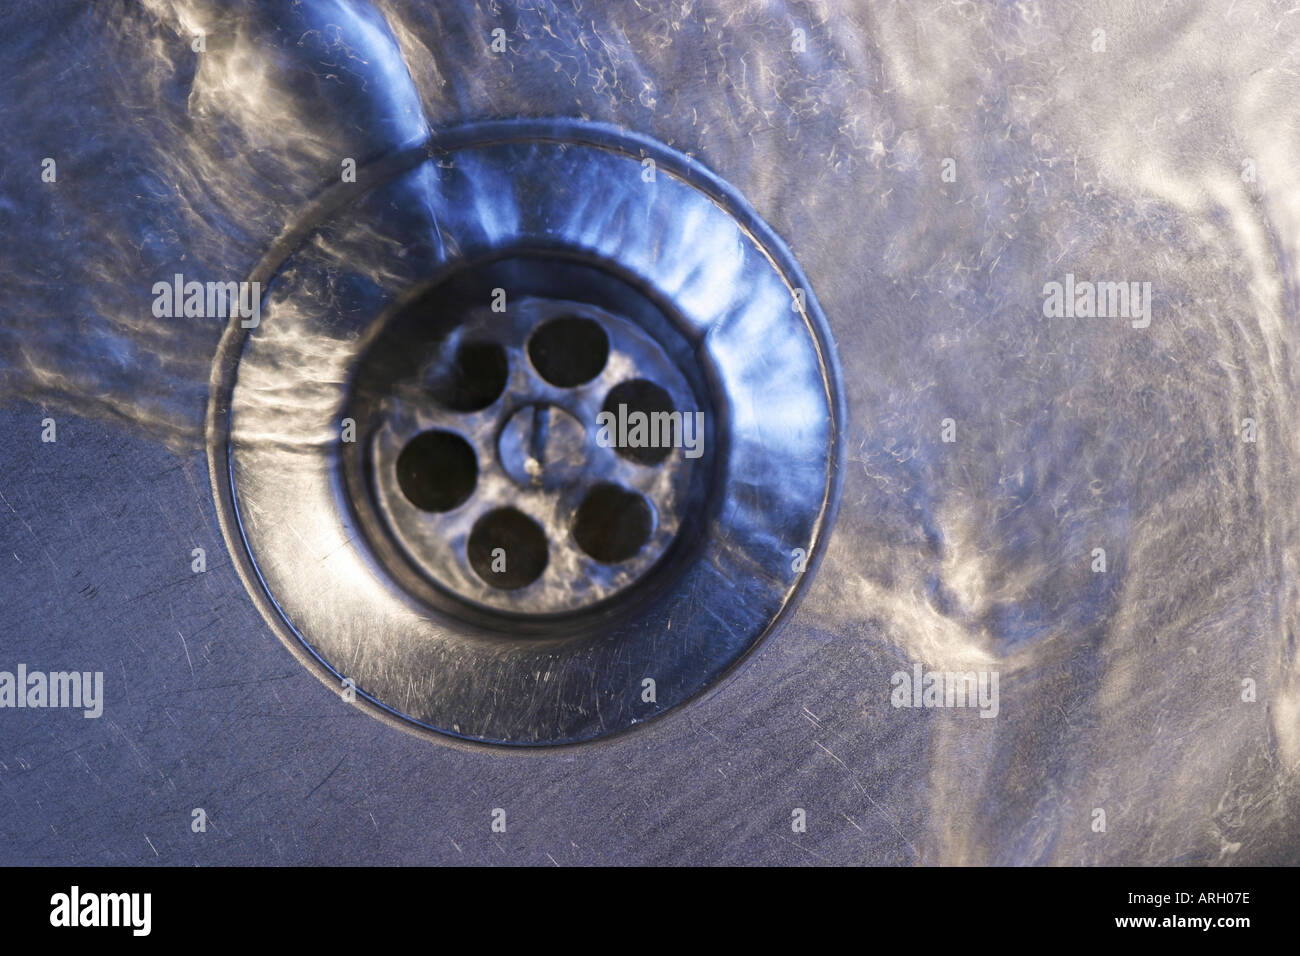 water draining down sink plug hole Stock Photo